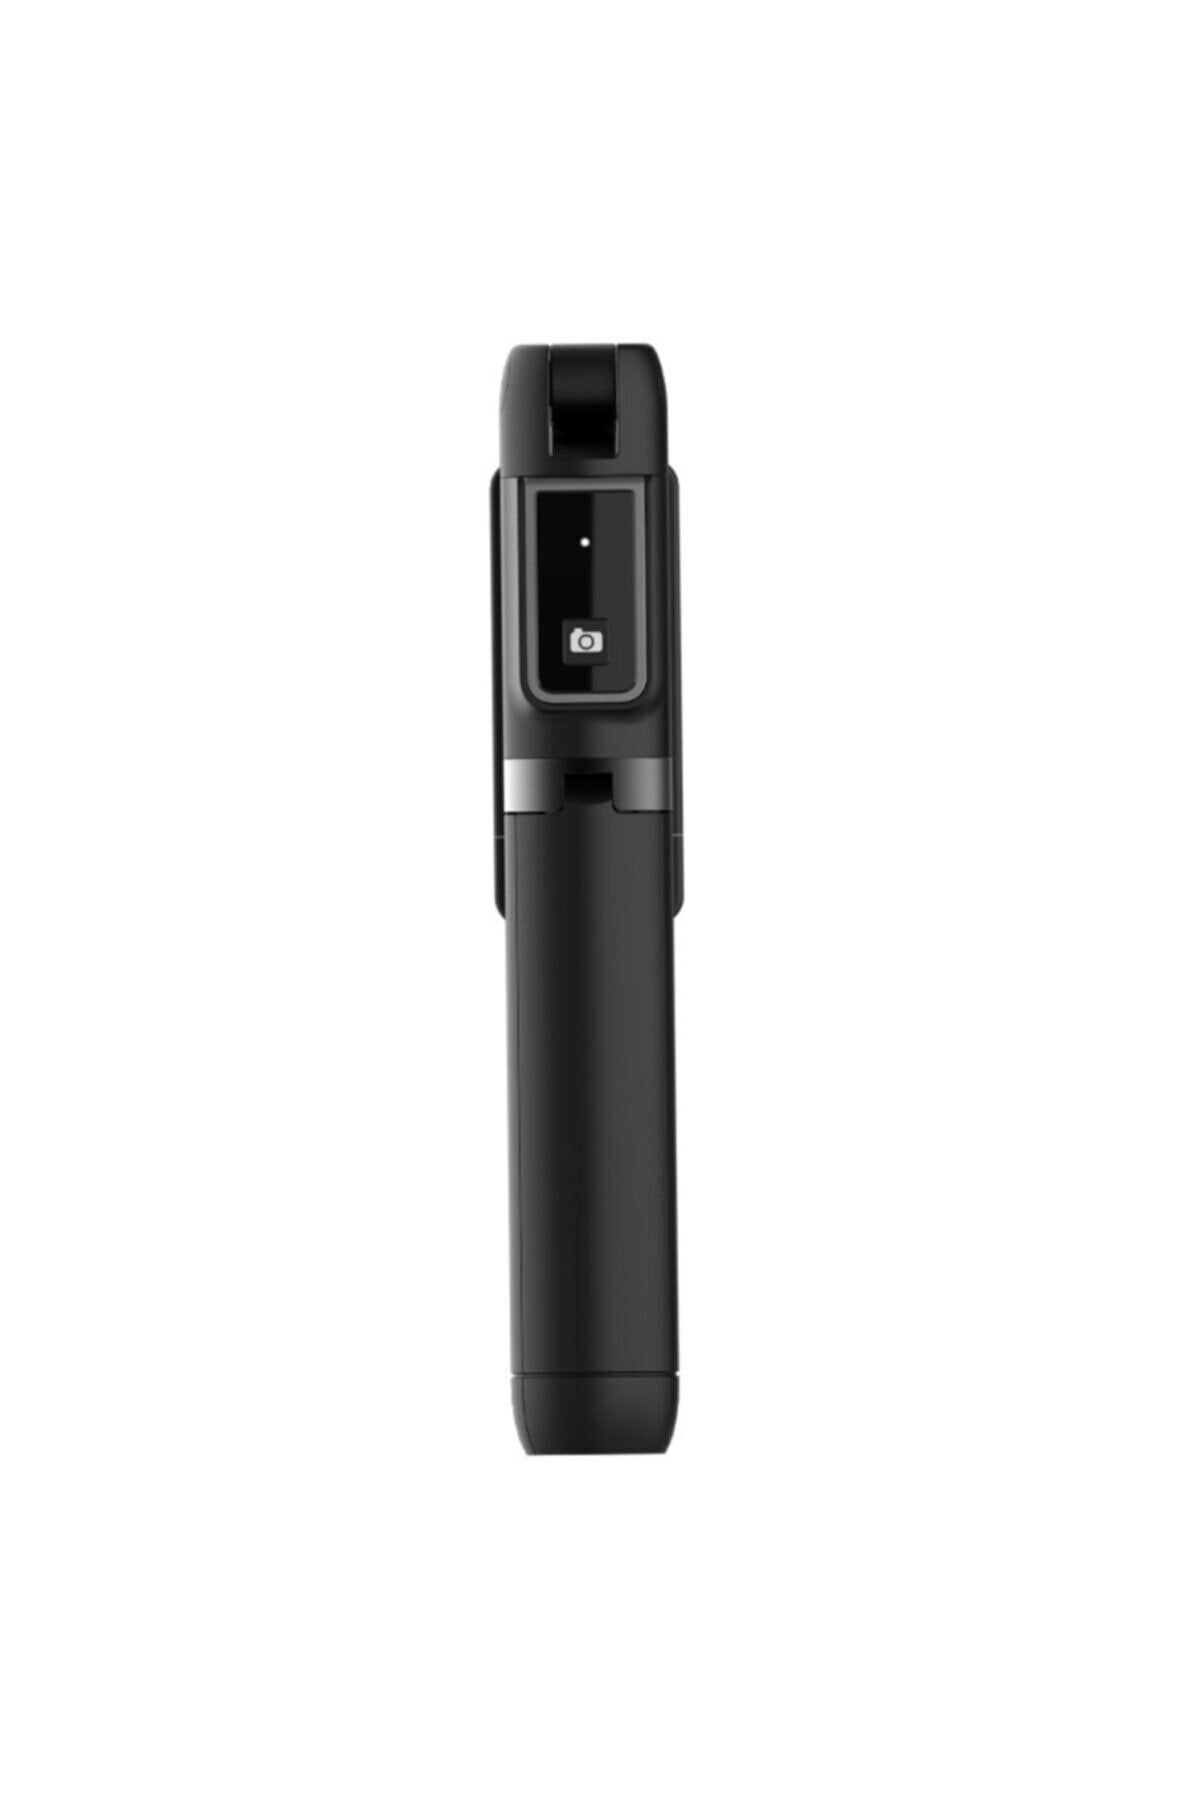 BLUPPLE P40s Selfie Çubuğu Bluetooth 4.0 Gimbal Tripot Stick Kumandalı Tripod Kablosuz 19/100 Cm